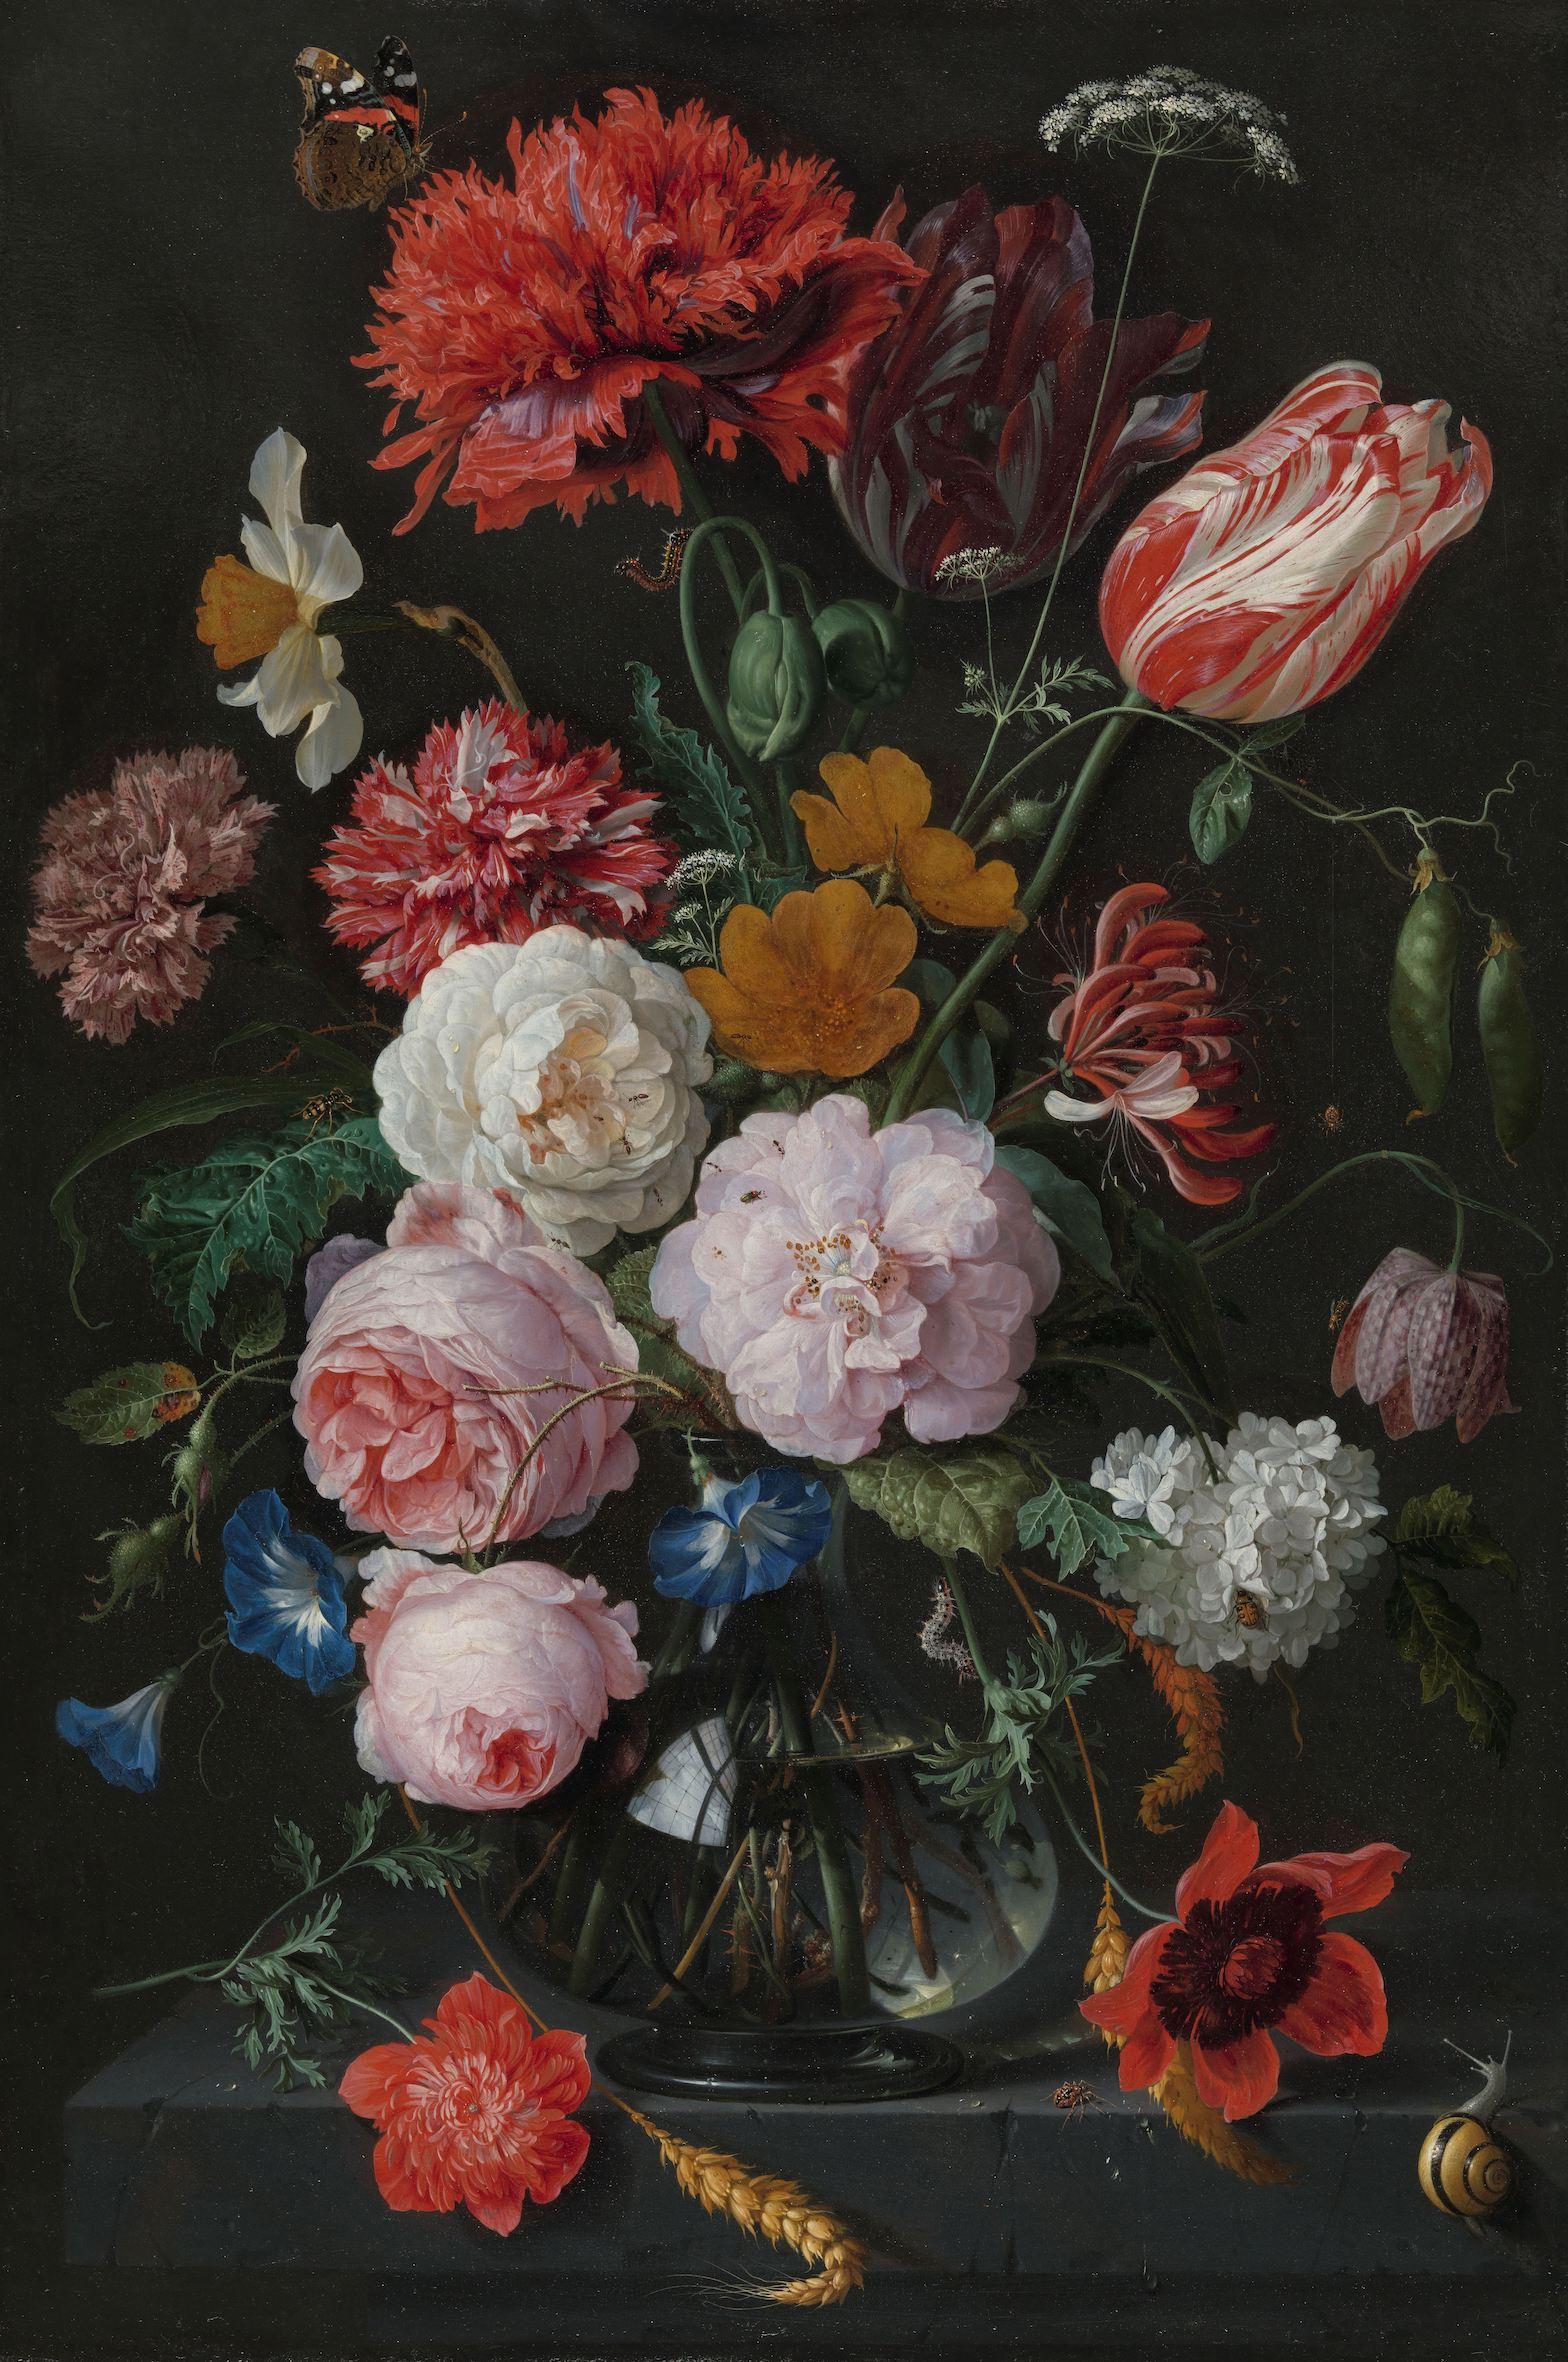 Jan Davidsz. de Heem, Νεκρή φύση με άνθη σε γυάλινο βάζο, Rijksmuseum, Άμστερνταμ.